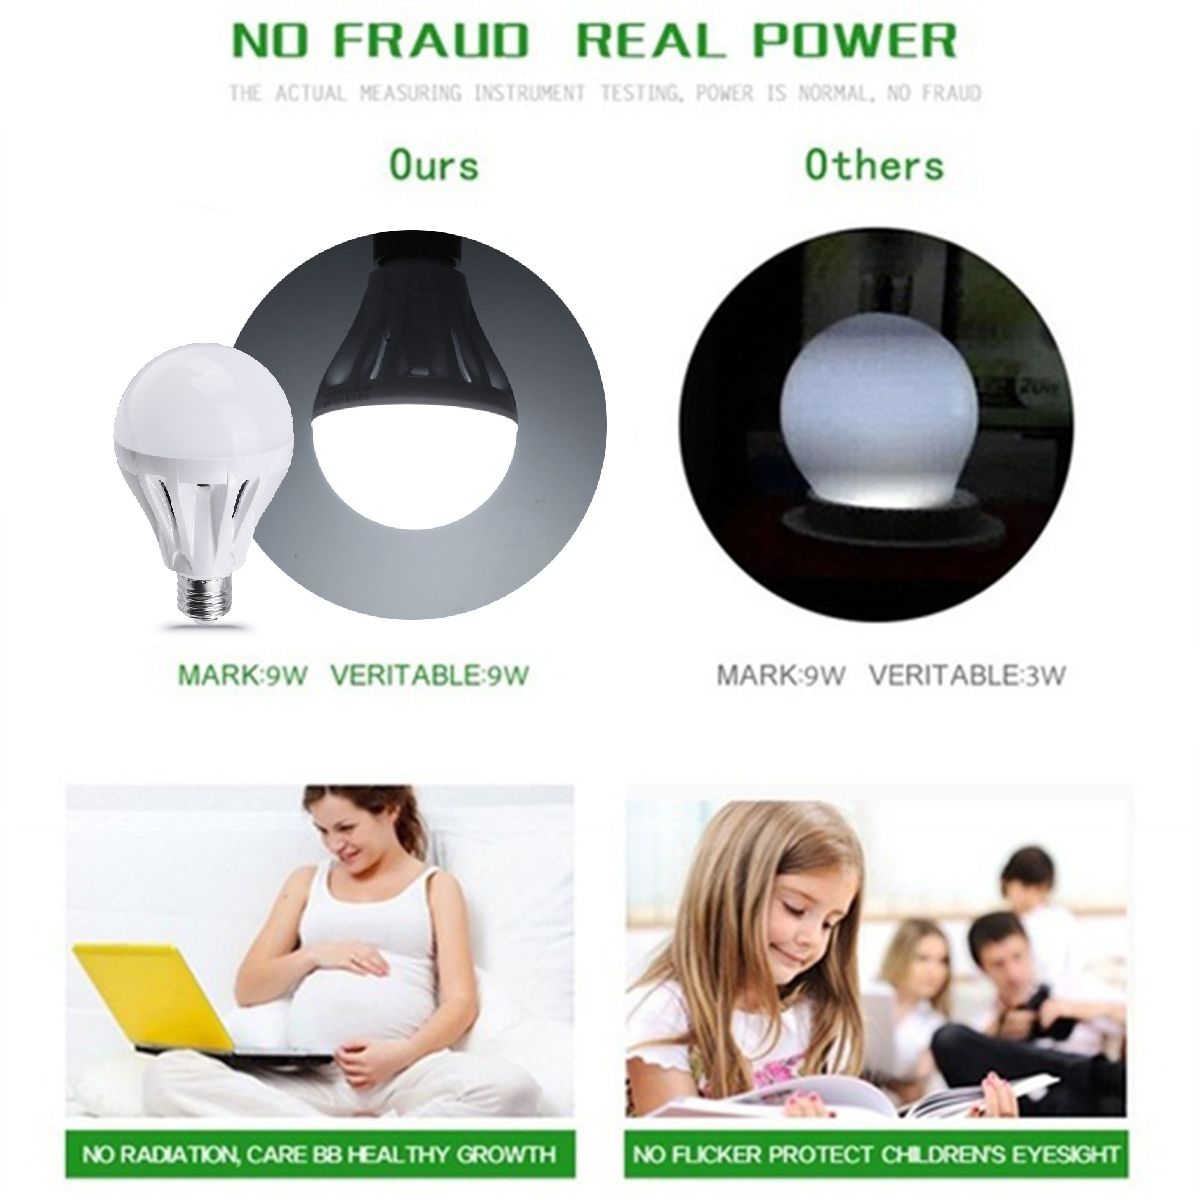 3579W-LED-Bulb-Spotlight-E27-2835SMD-Shop-Office-Radar-sensor-Lamp-Bright-1680367